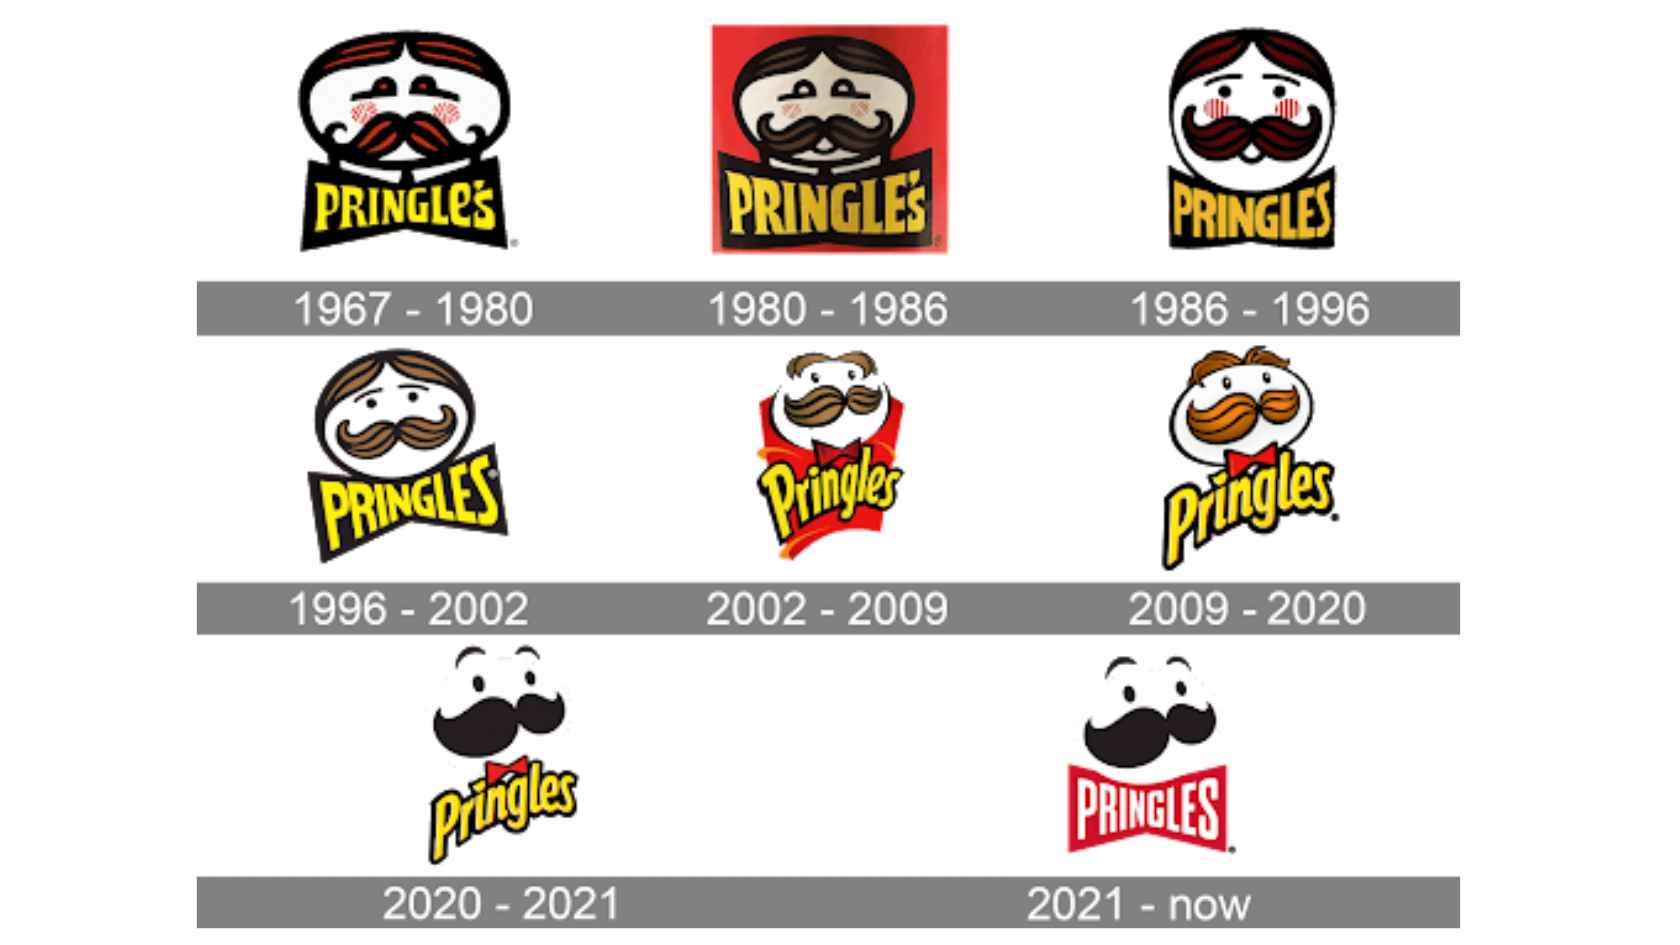 Why did Pringles Change Their Logo? - BrandVillage